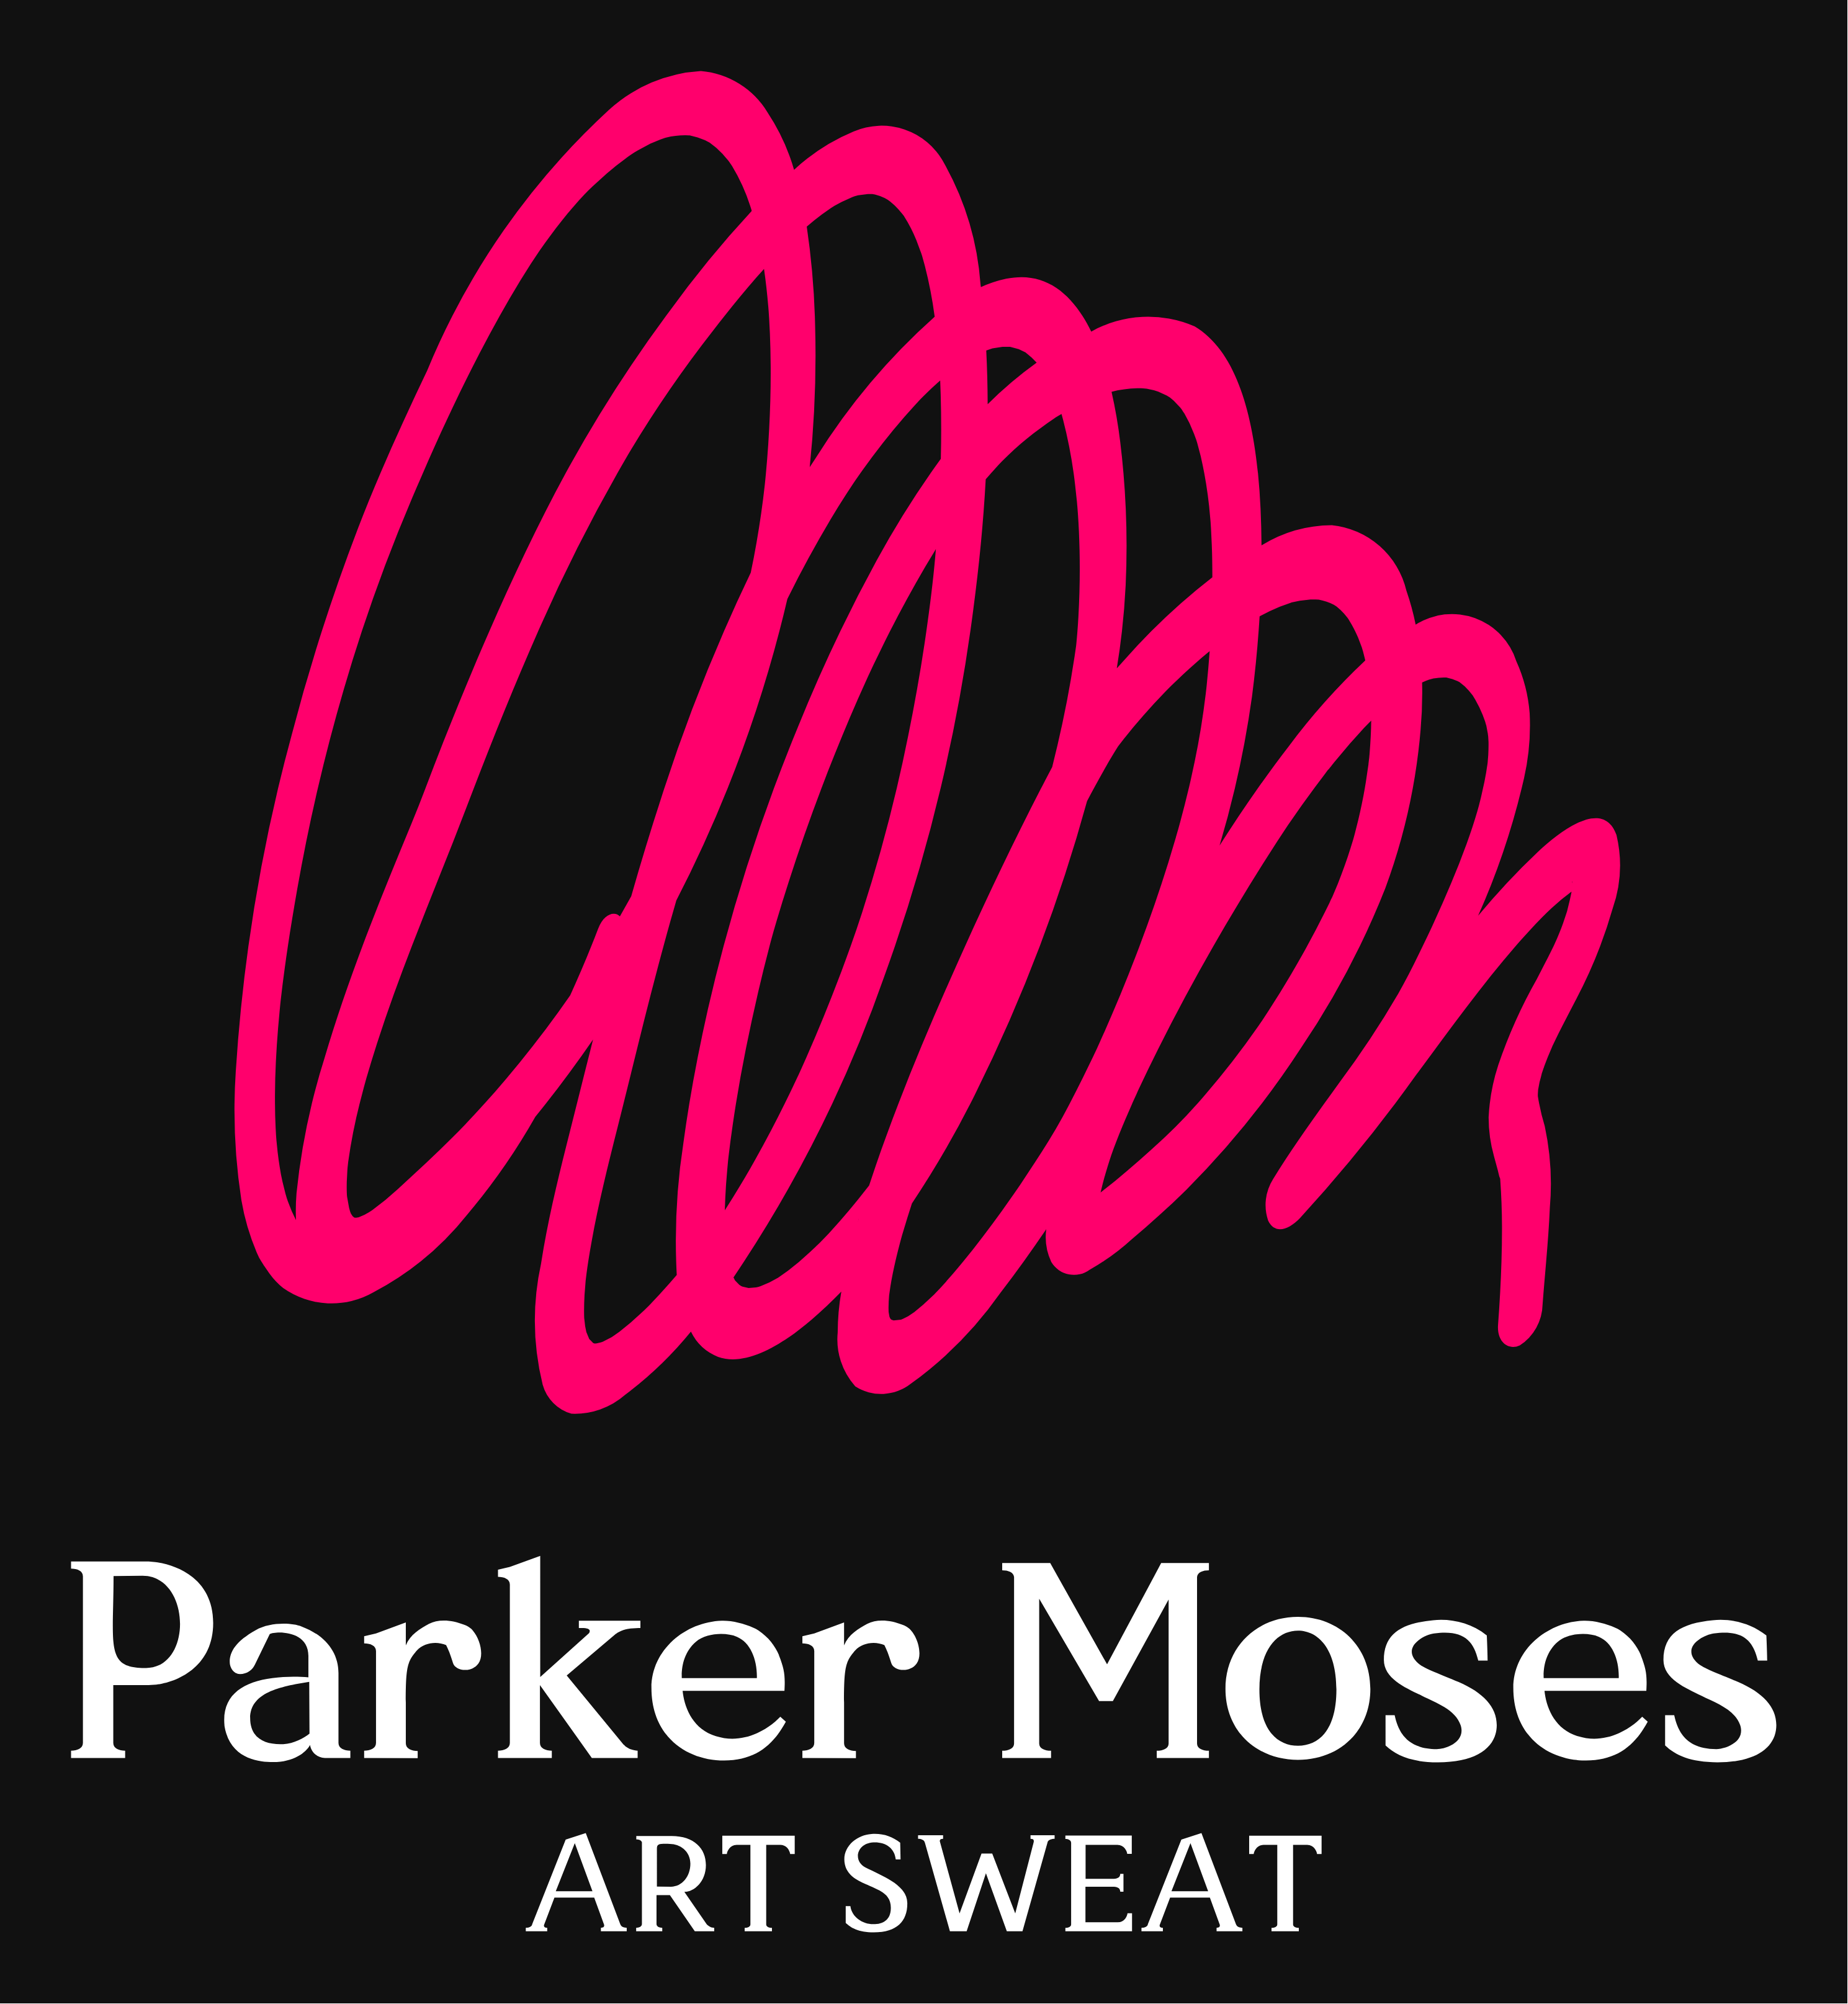 Parker Moses